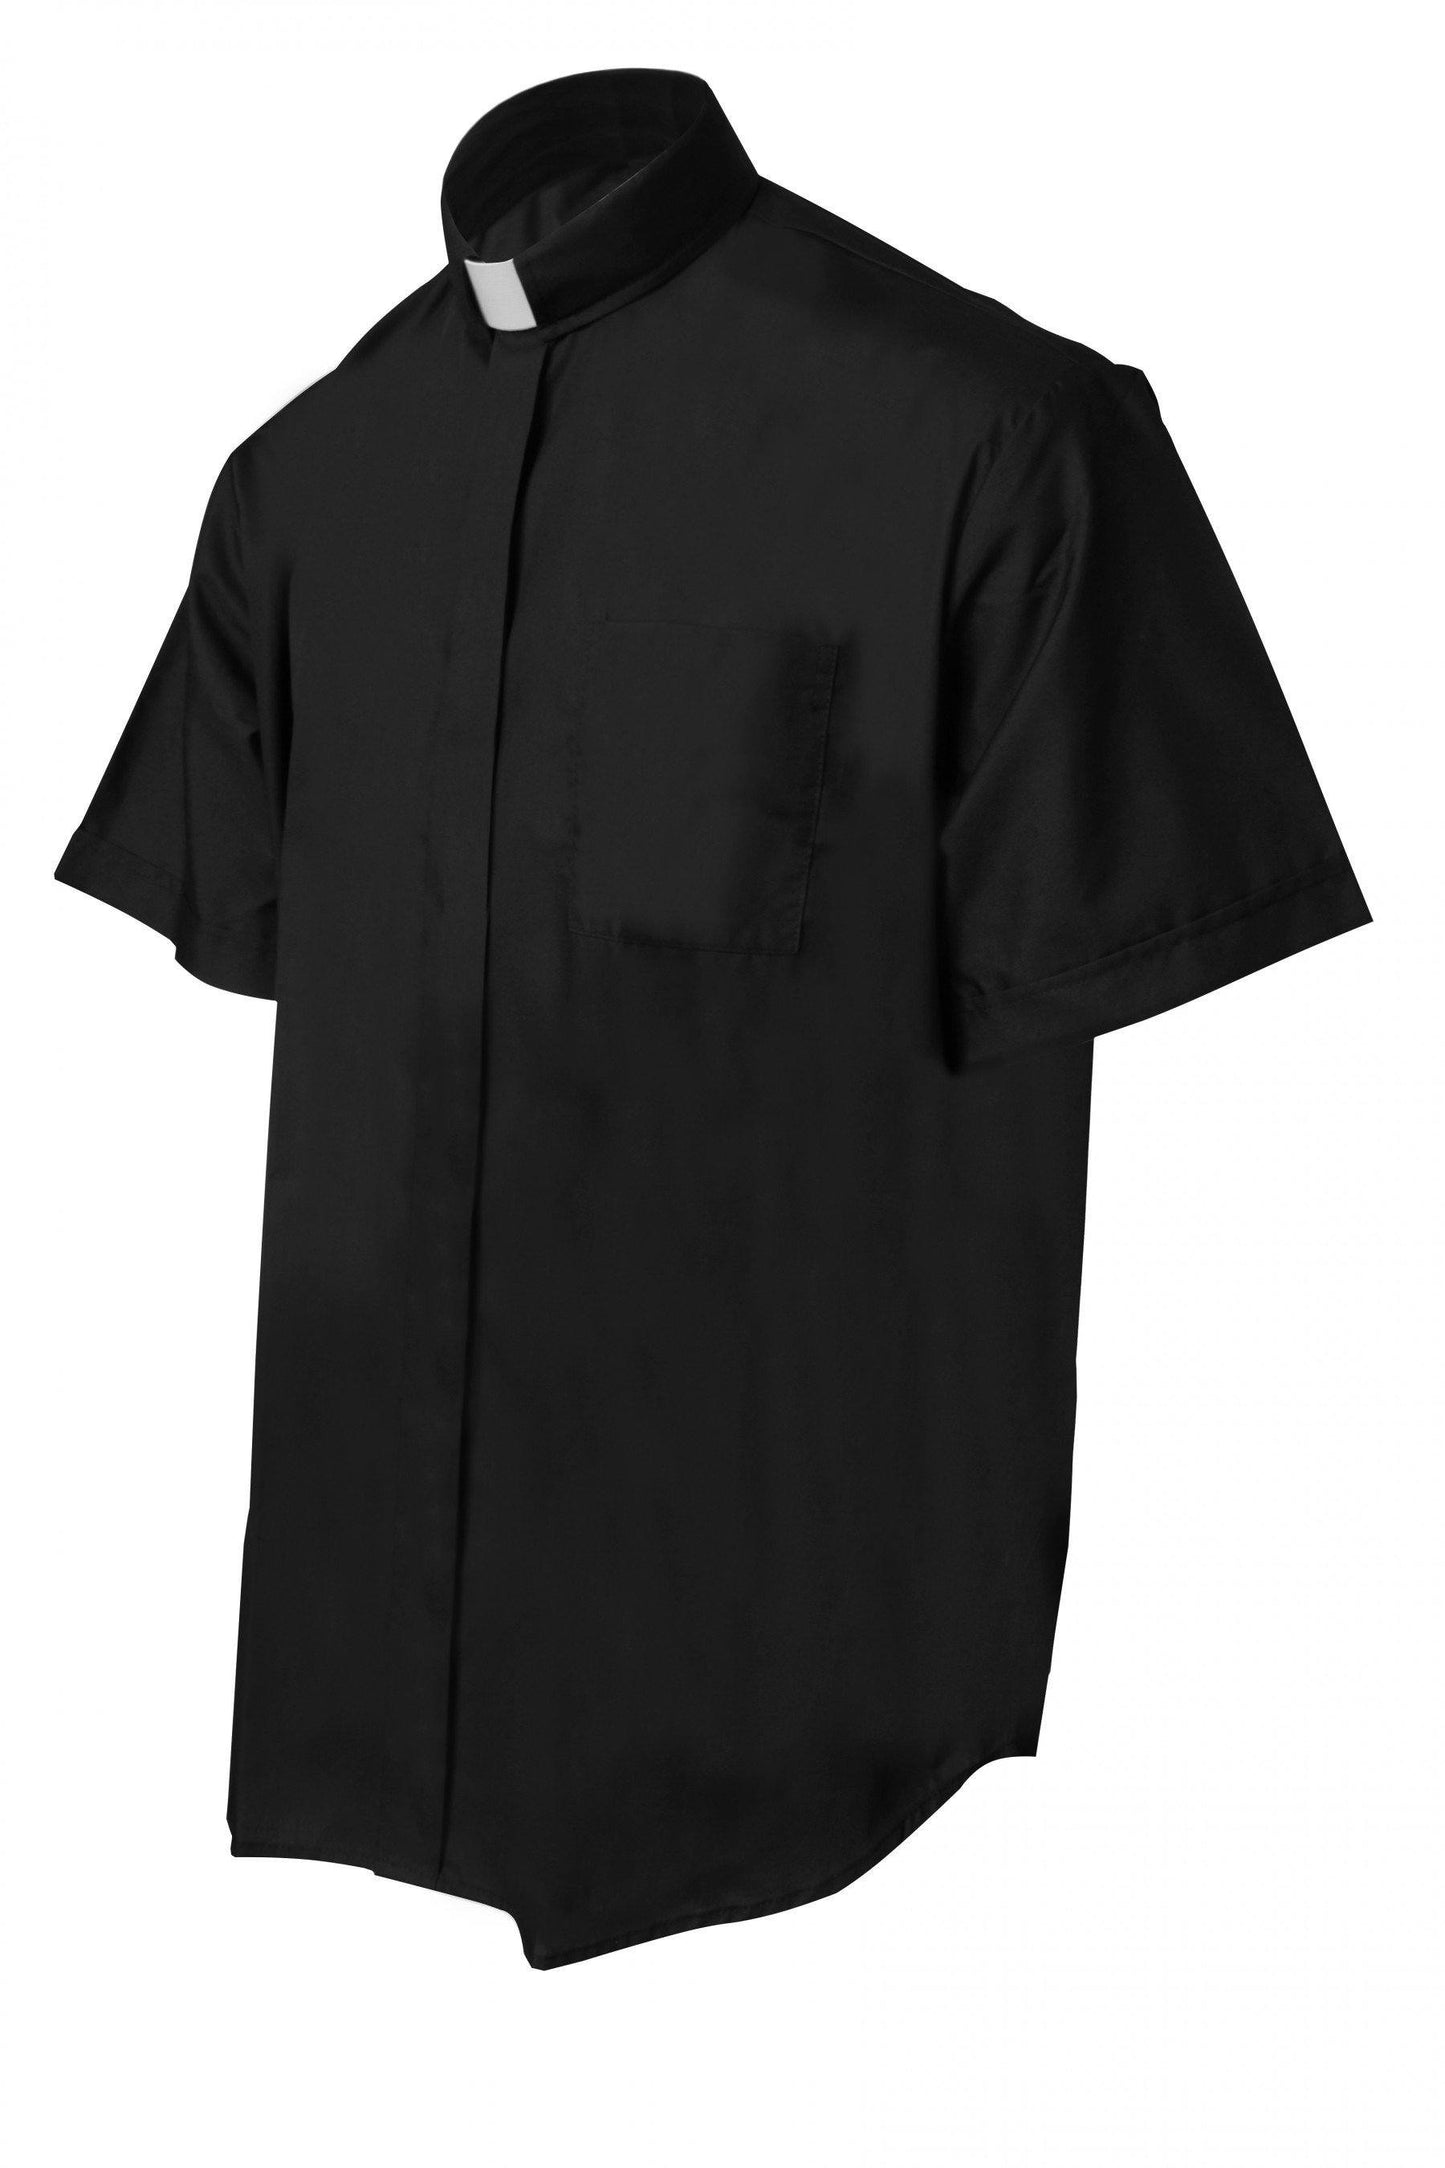 Black Short Sleeve Clergy Shirt - Churchings